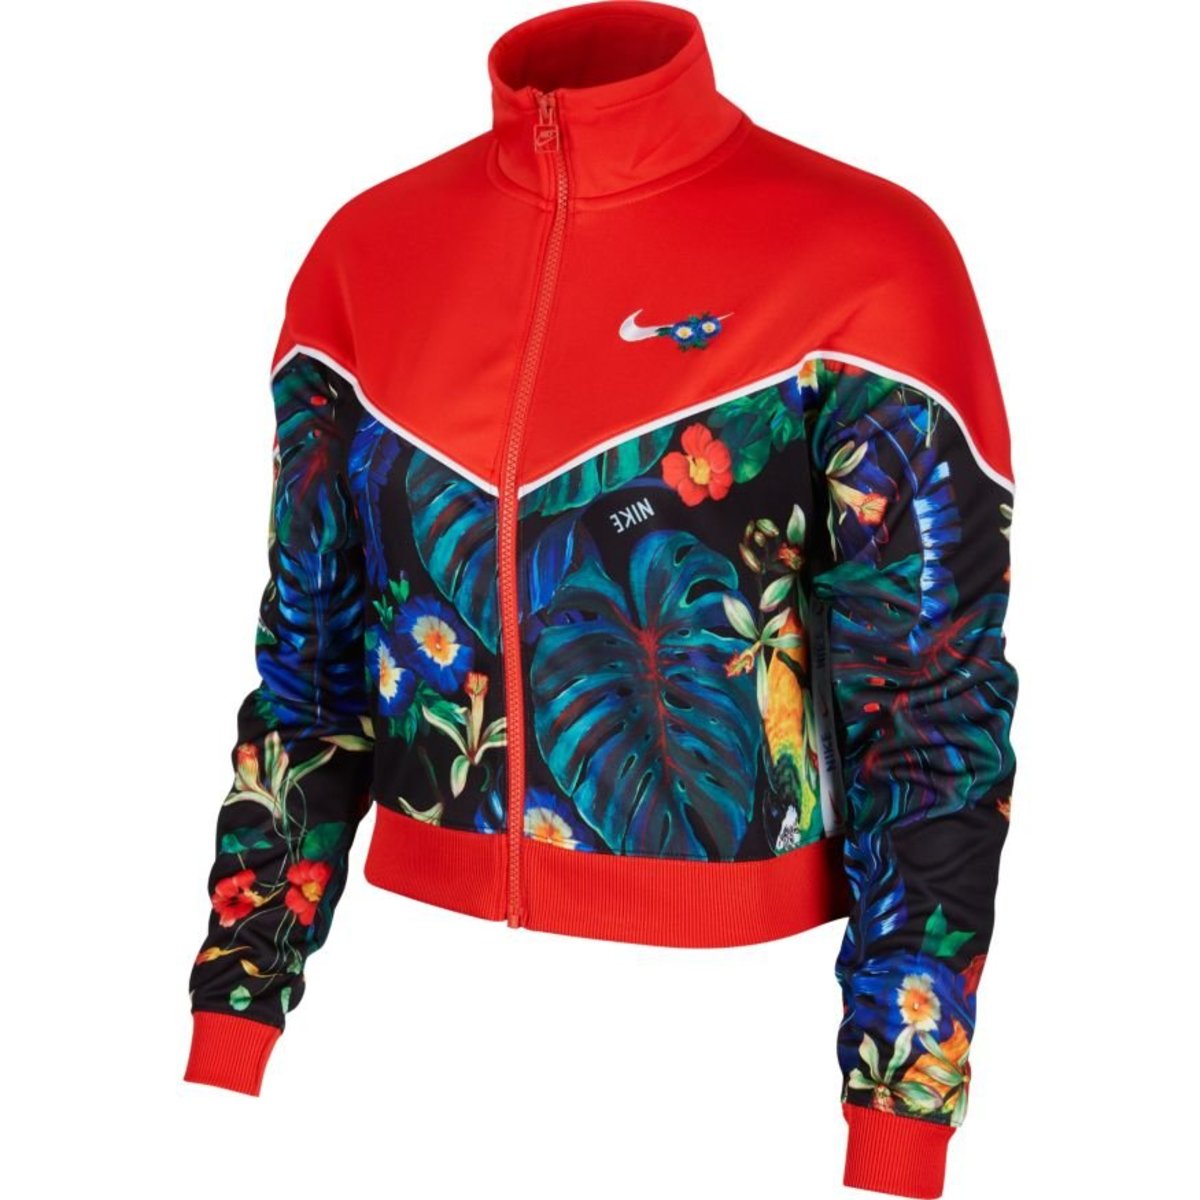 Nike Women’s Red Tropical Hyper Femme Print Tracksuit Jacket Nike ktmart 5